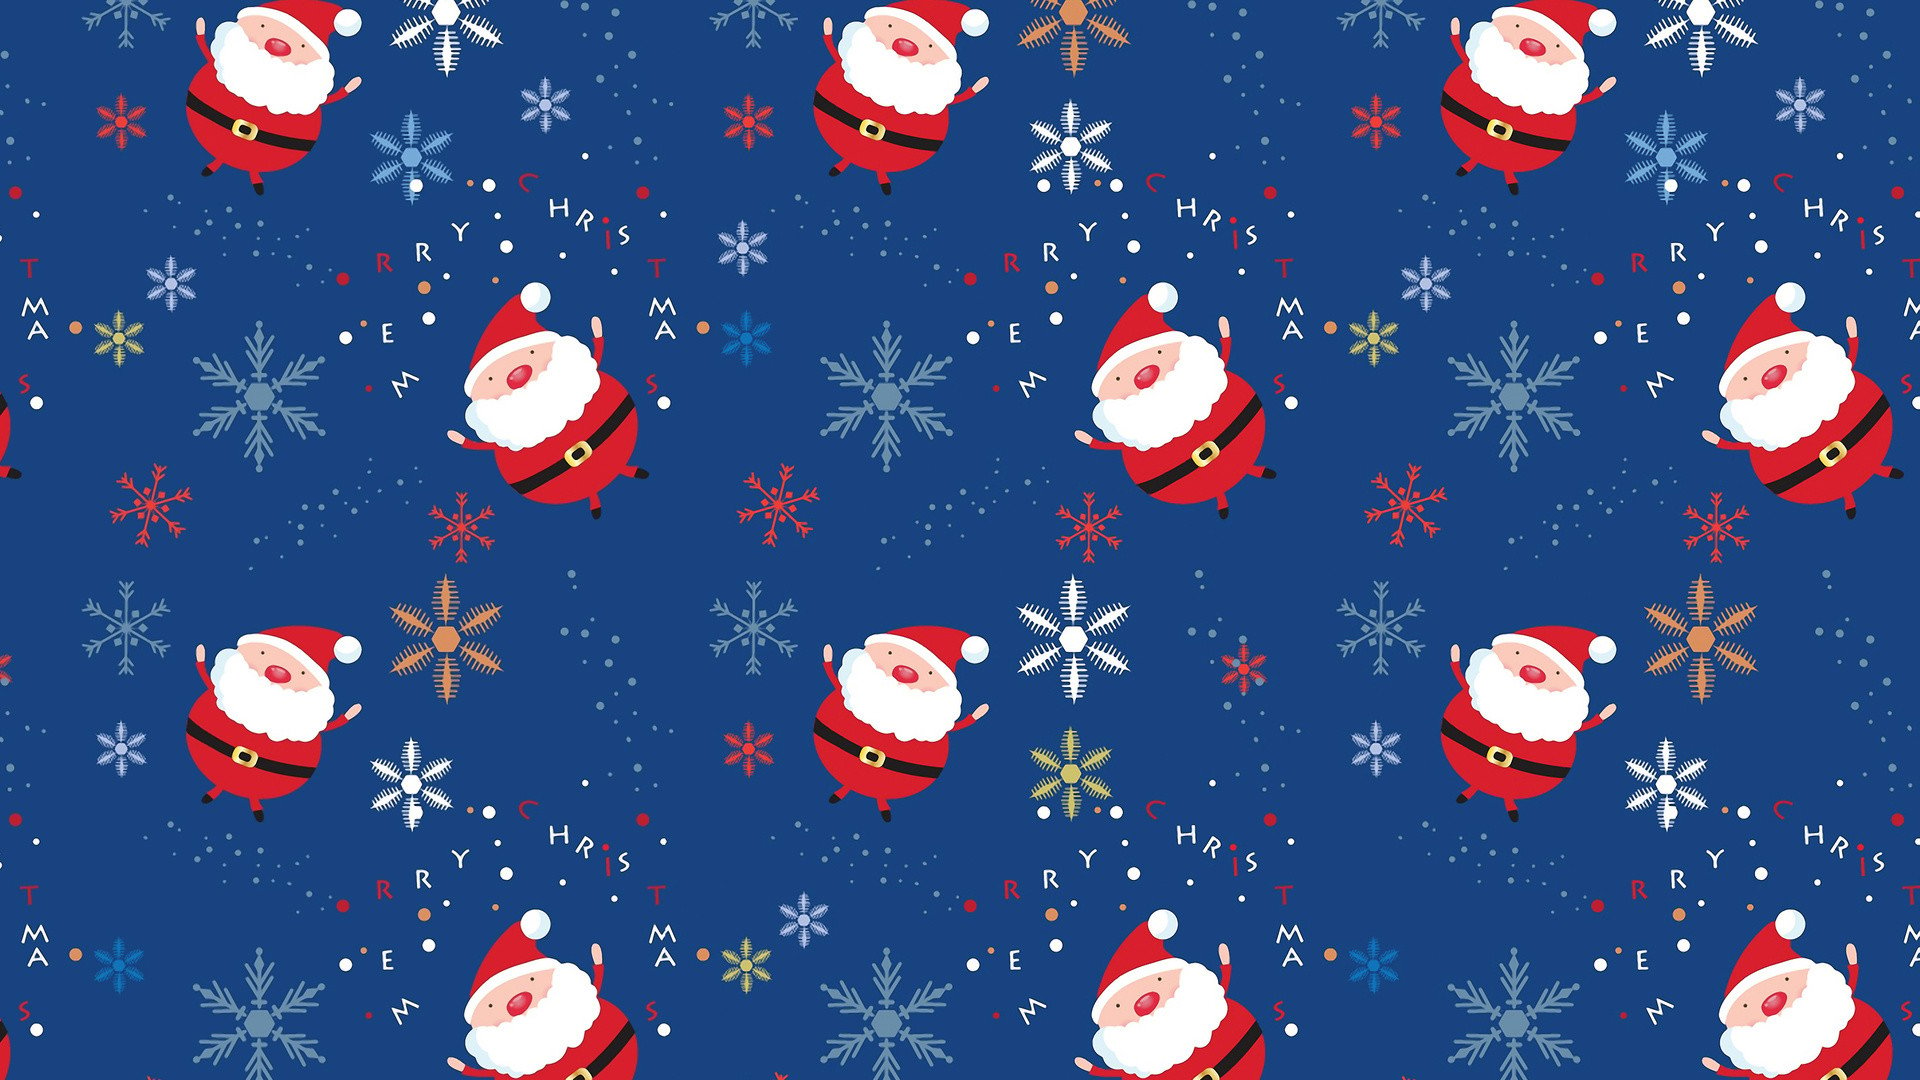 Cute Christmas Desktop Backgrounds 63 images